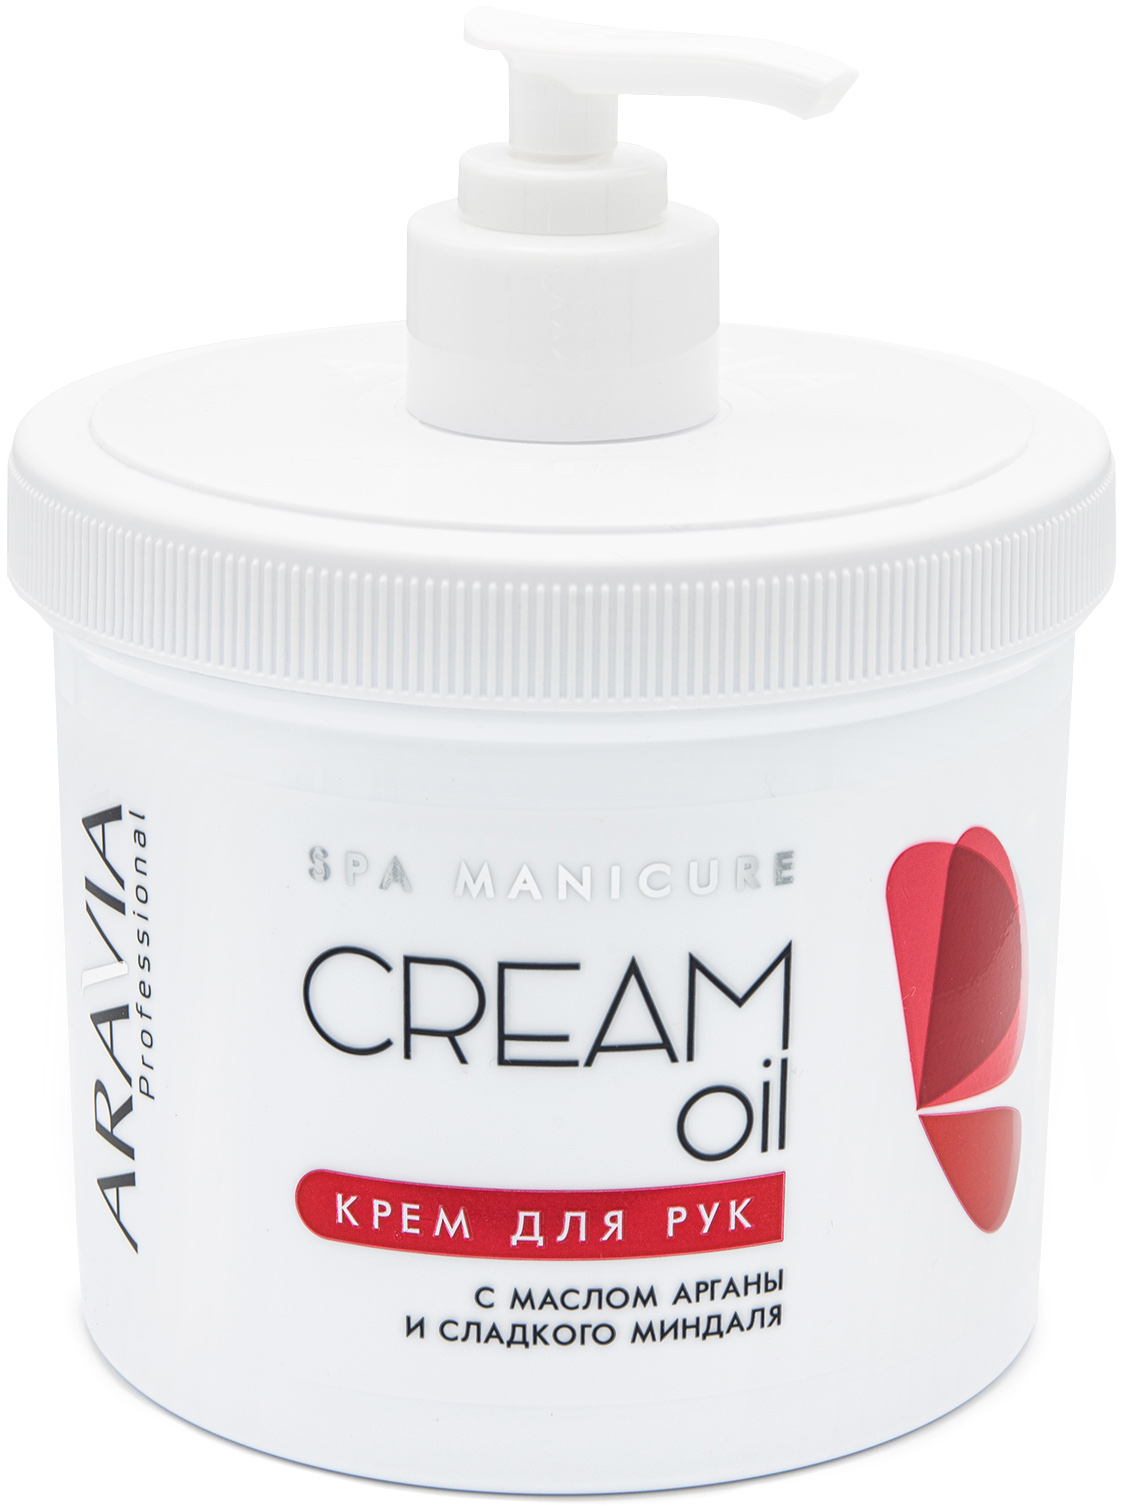 Aravia Professional Крем для рук Cream Oil с маслом арганы и